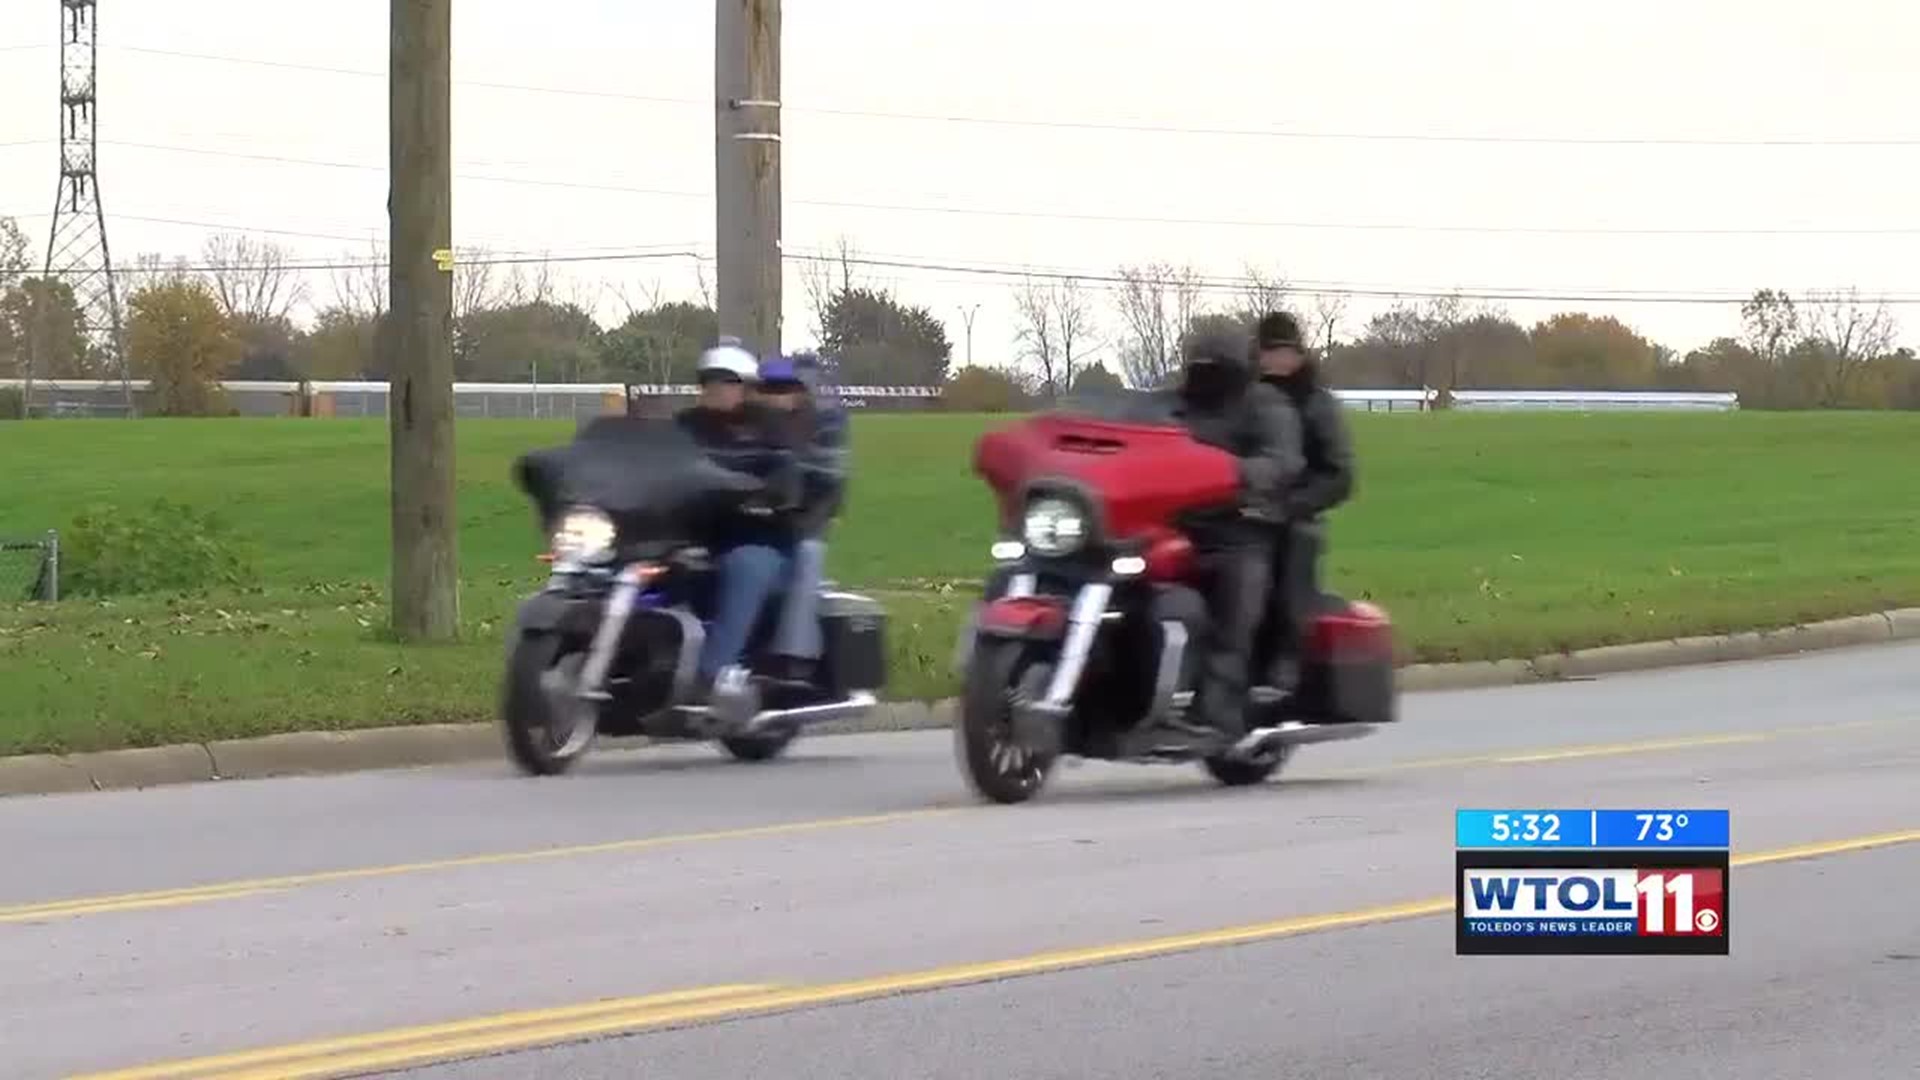 Expert urges drivers to be vigilant as motorcycle season starts